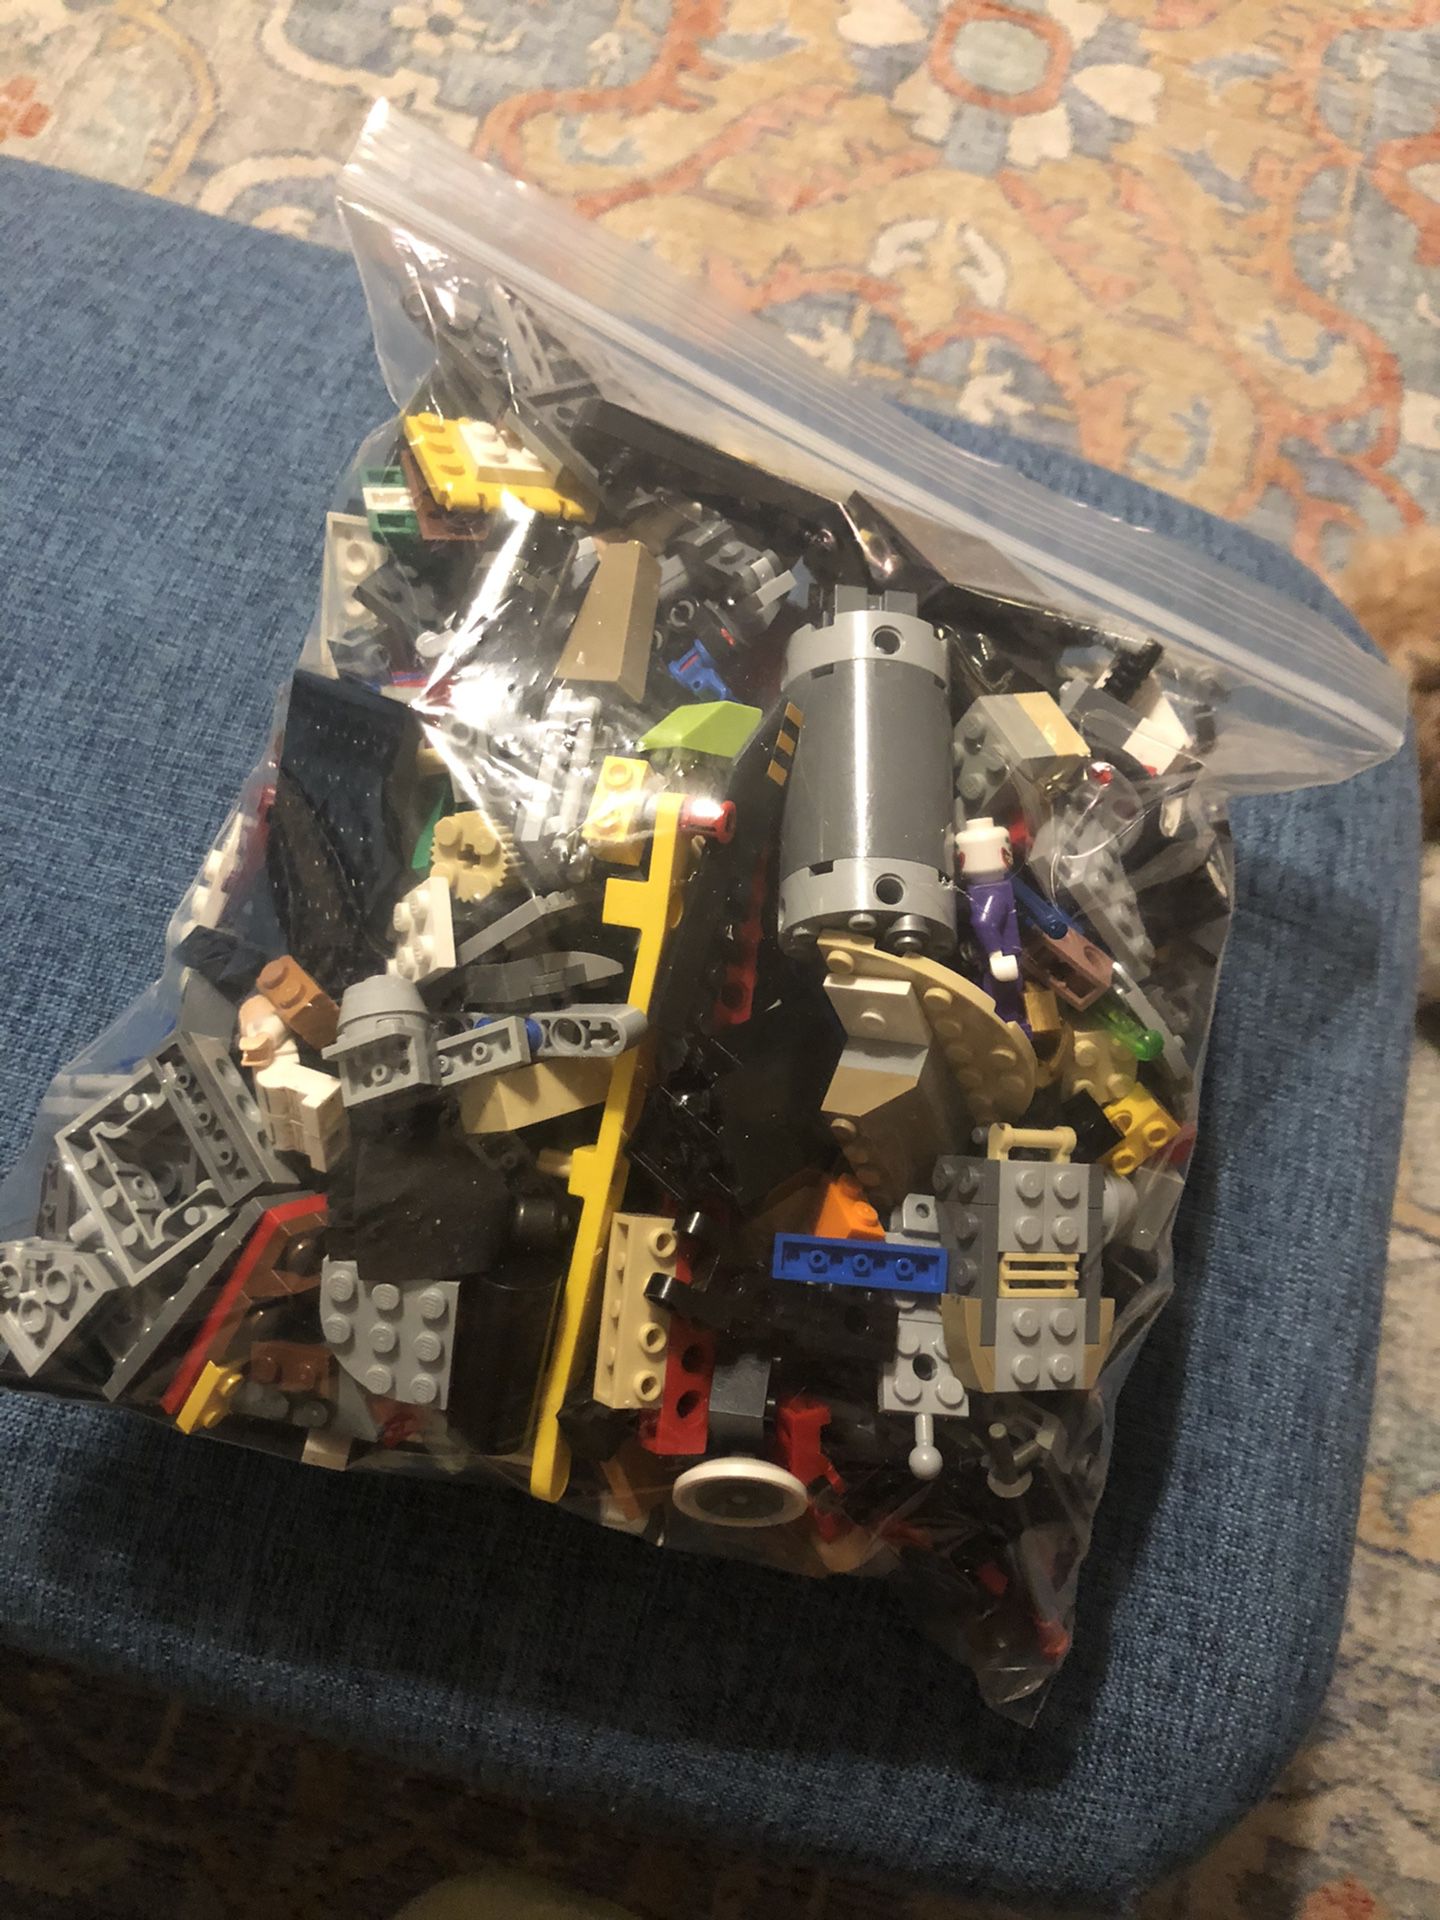 Four bags of legos (2.5 lbs each)